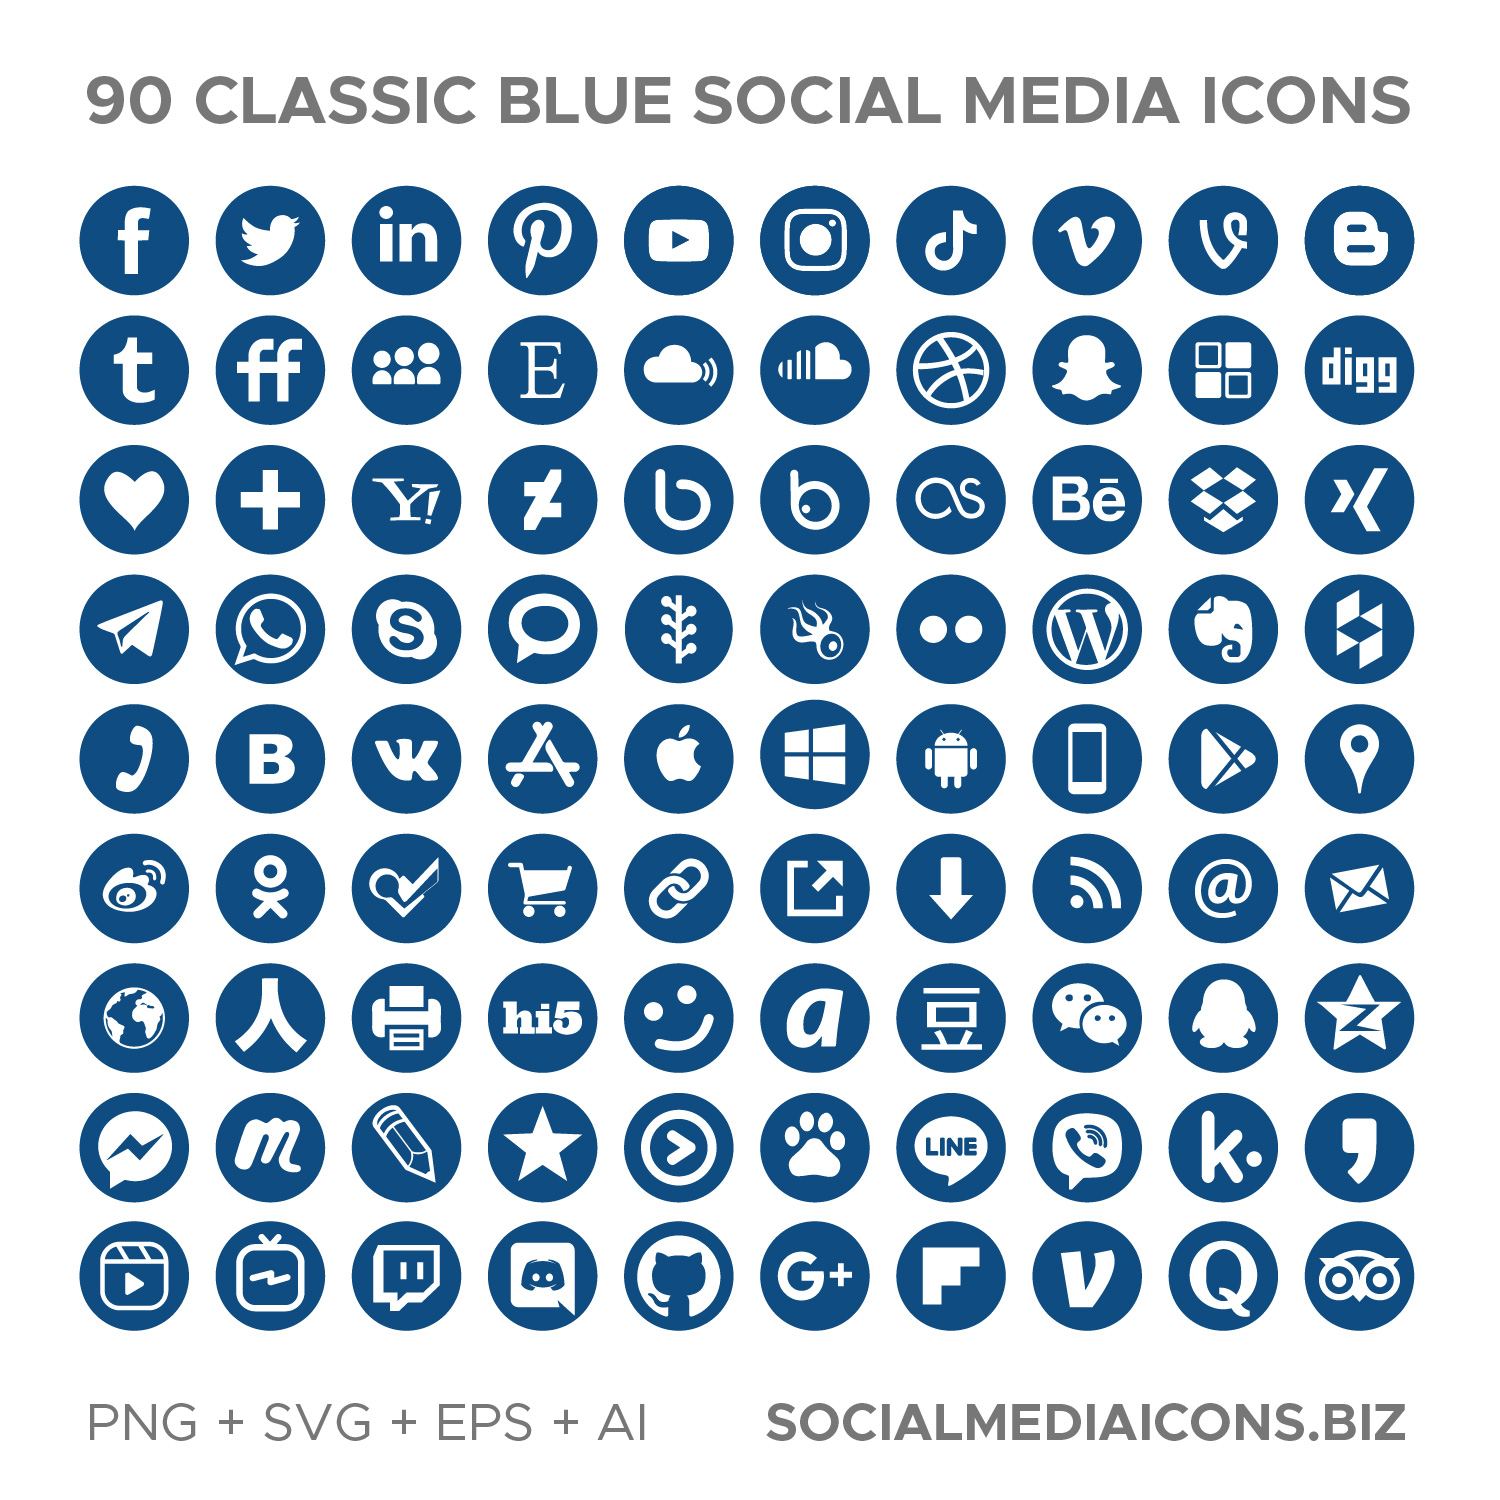 Classic Blue Social Media Icons